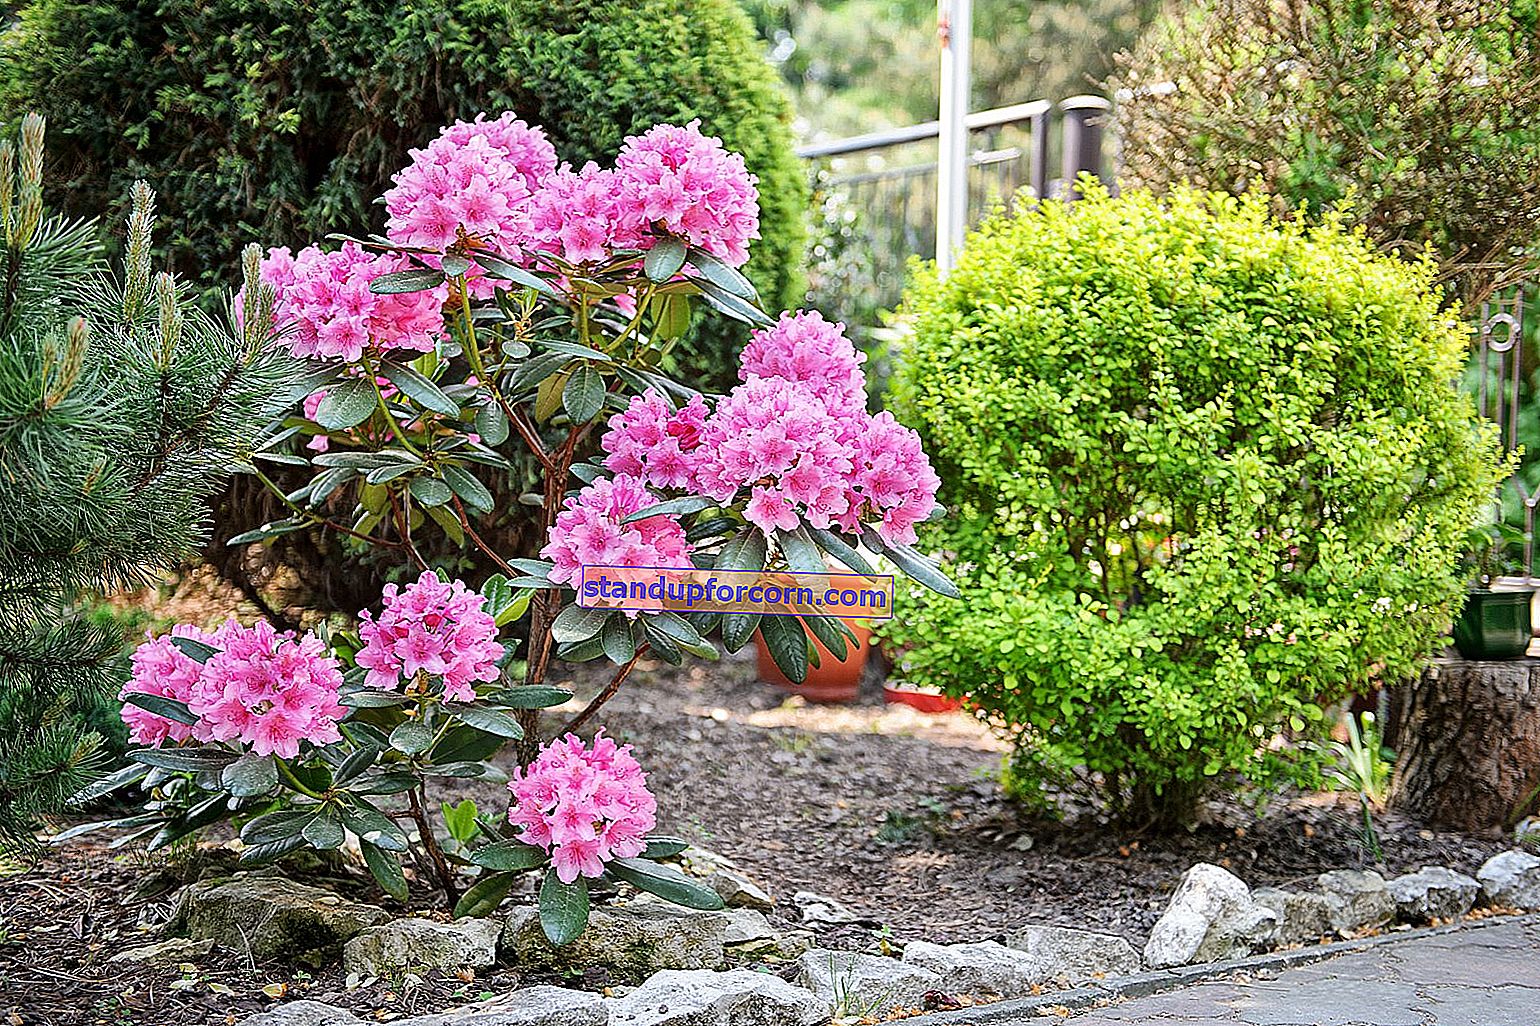 Rhododendron, rhododendron - καλλιέργεια, φροντίδα, αναπαραγωγή